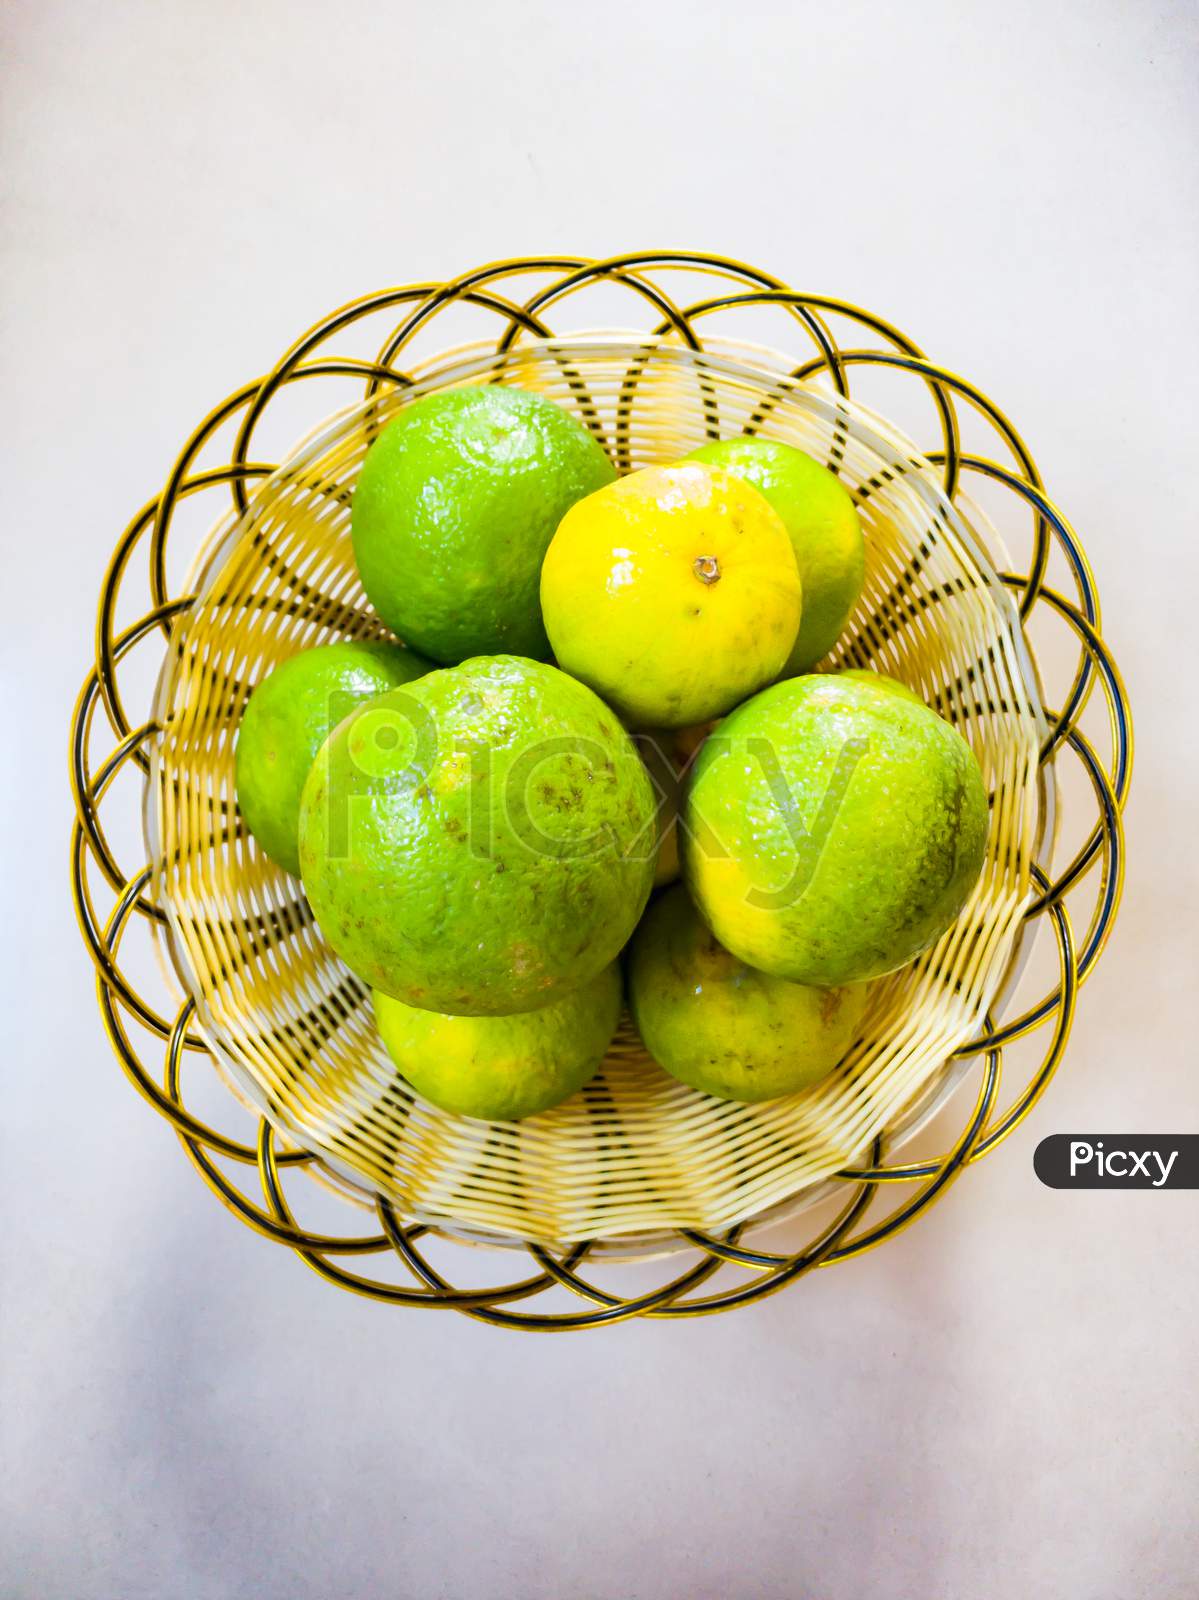 Fruit basket and beautiful mosambi fruit in it